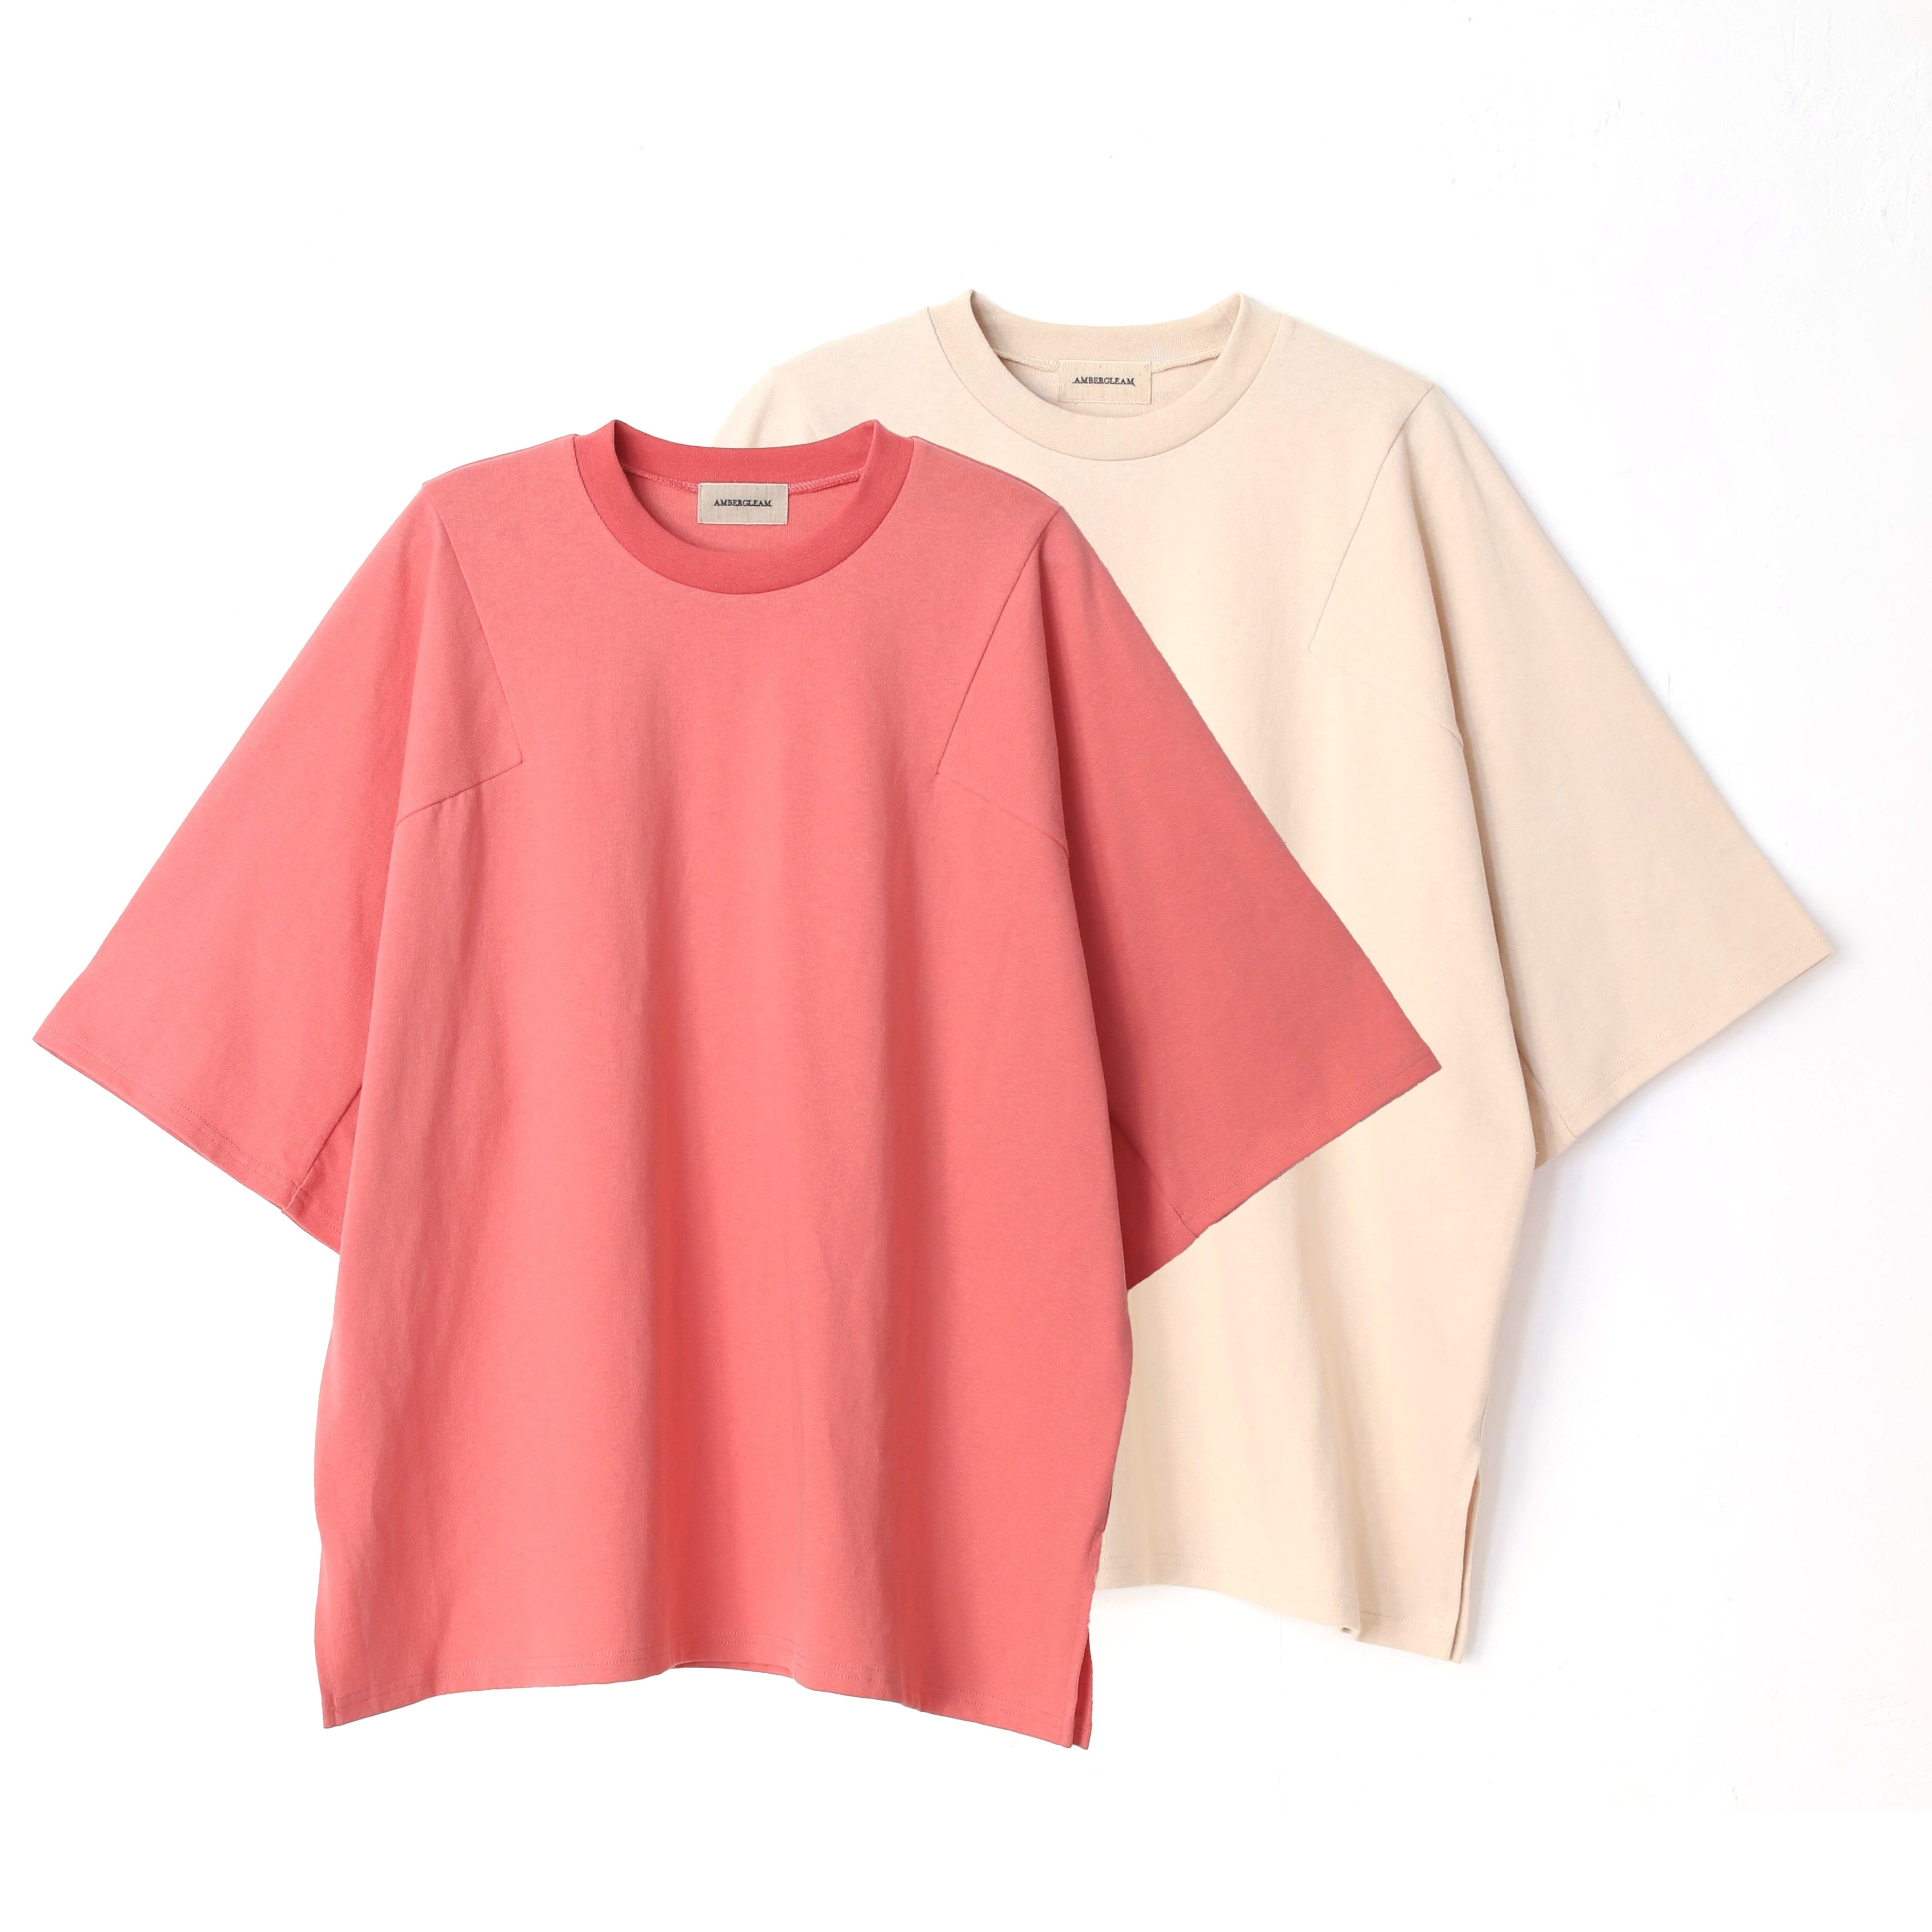 Name:Panel Basic T-Shirt | Color:Flamingo/Ash White【AMBERGLEAM_アンバーグリーム】| No:1168